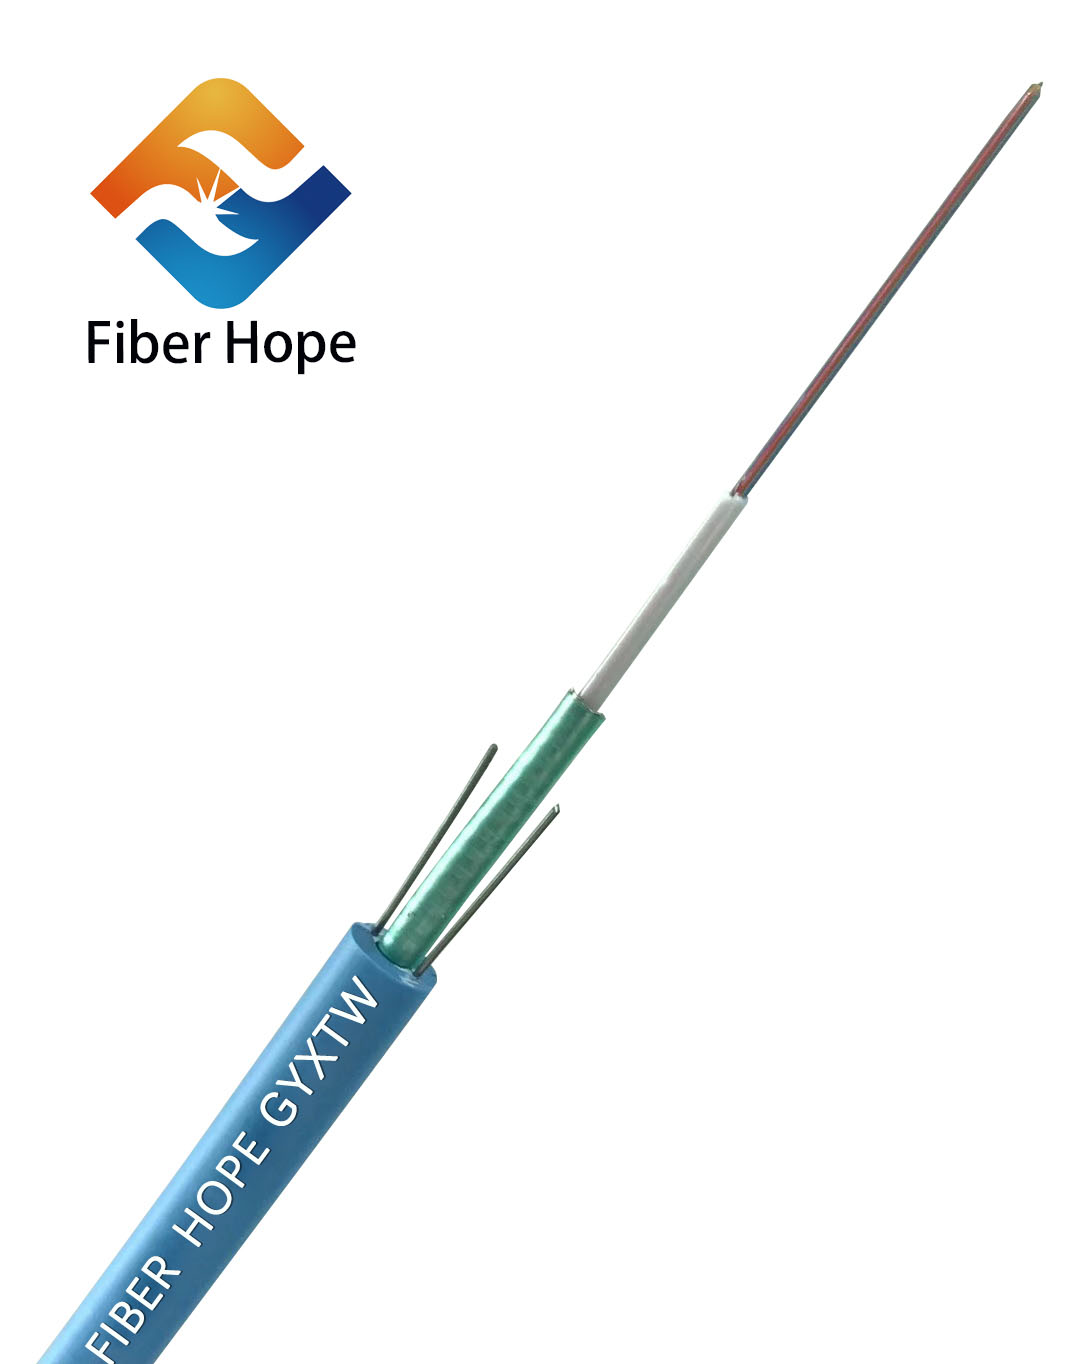 news-How did Fiber Hope Fiber Optic Cable design outdoor fiber optic cable-Fiber Hope-img